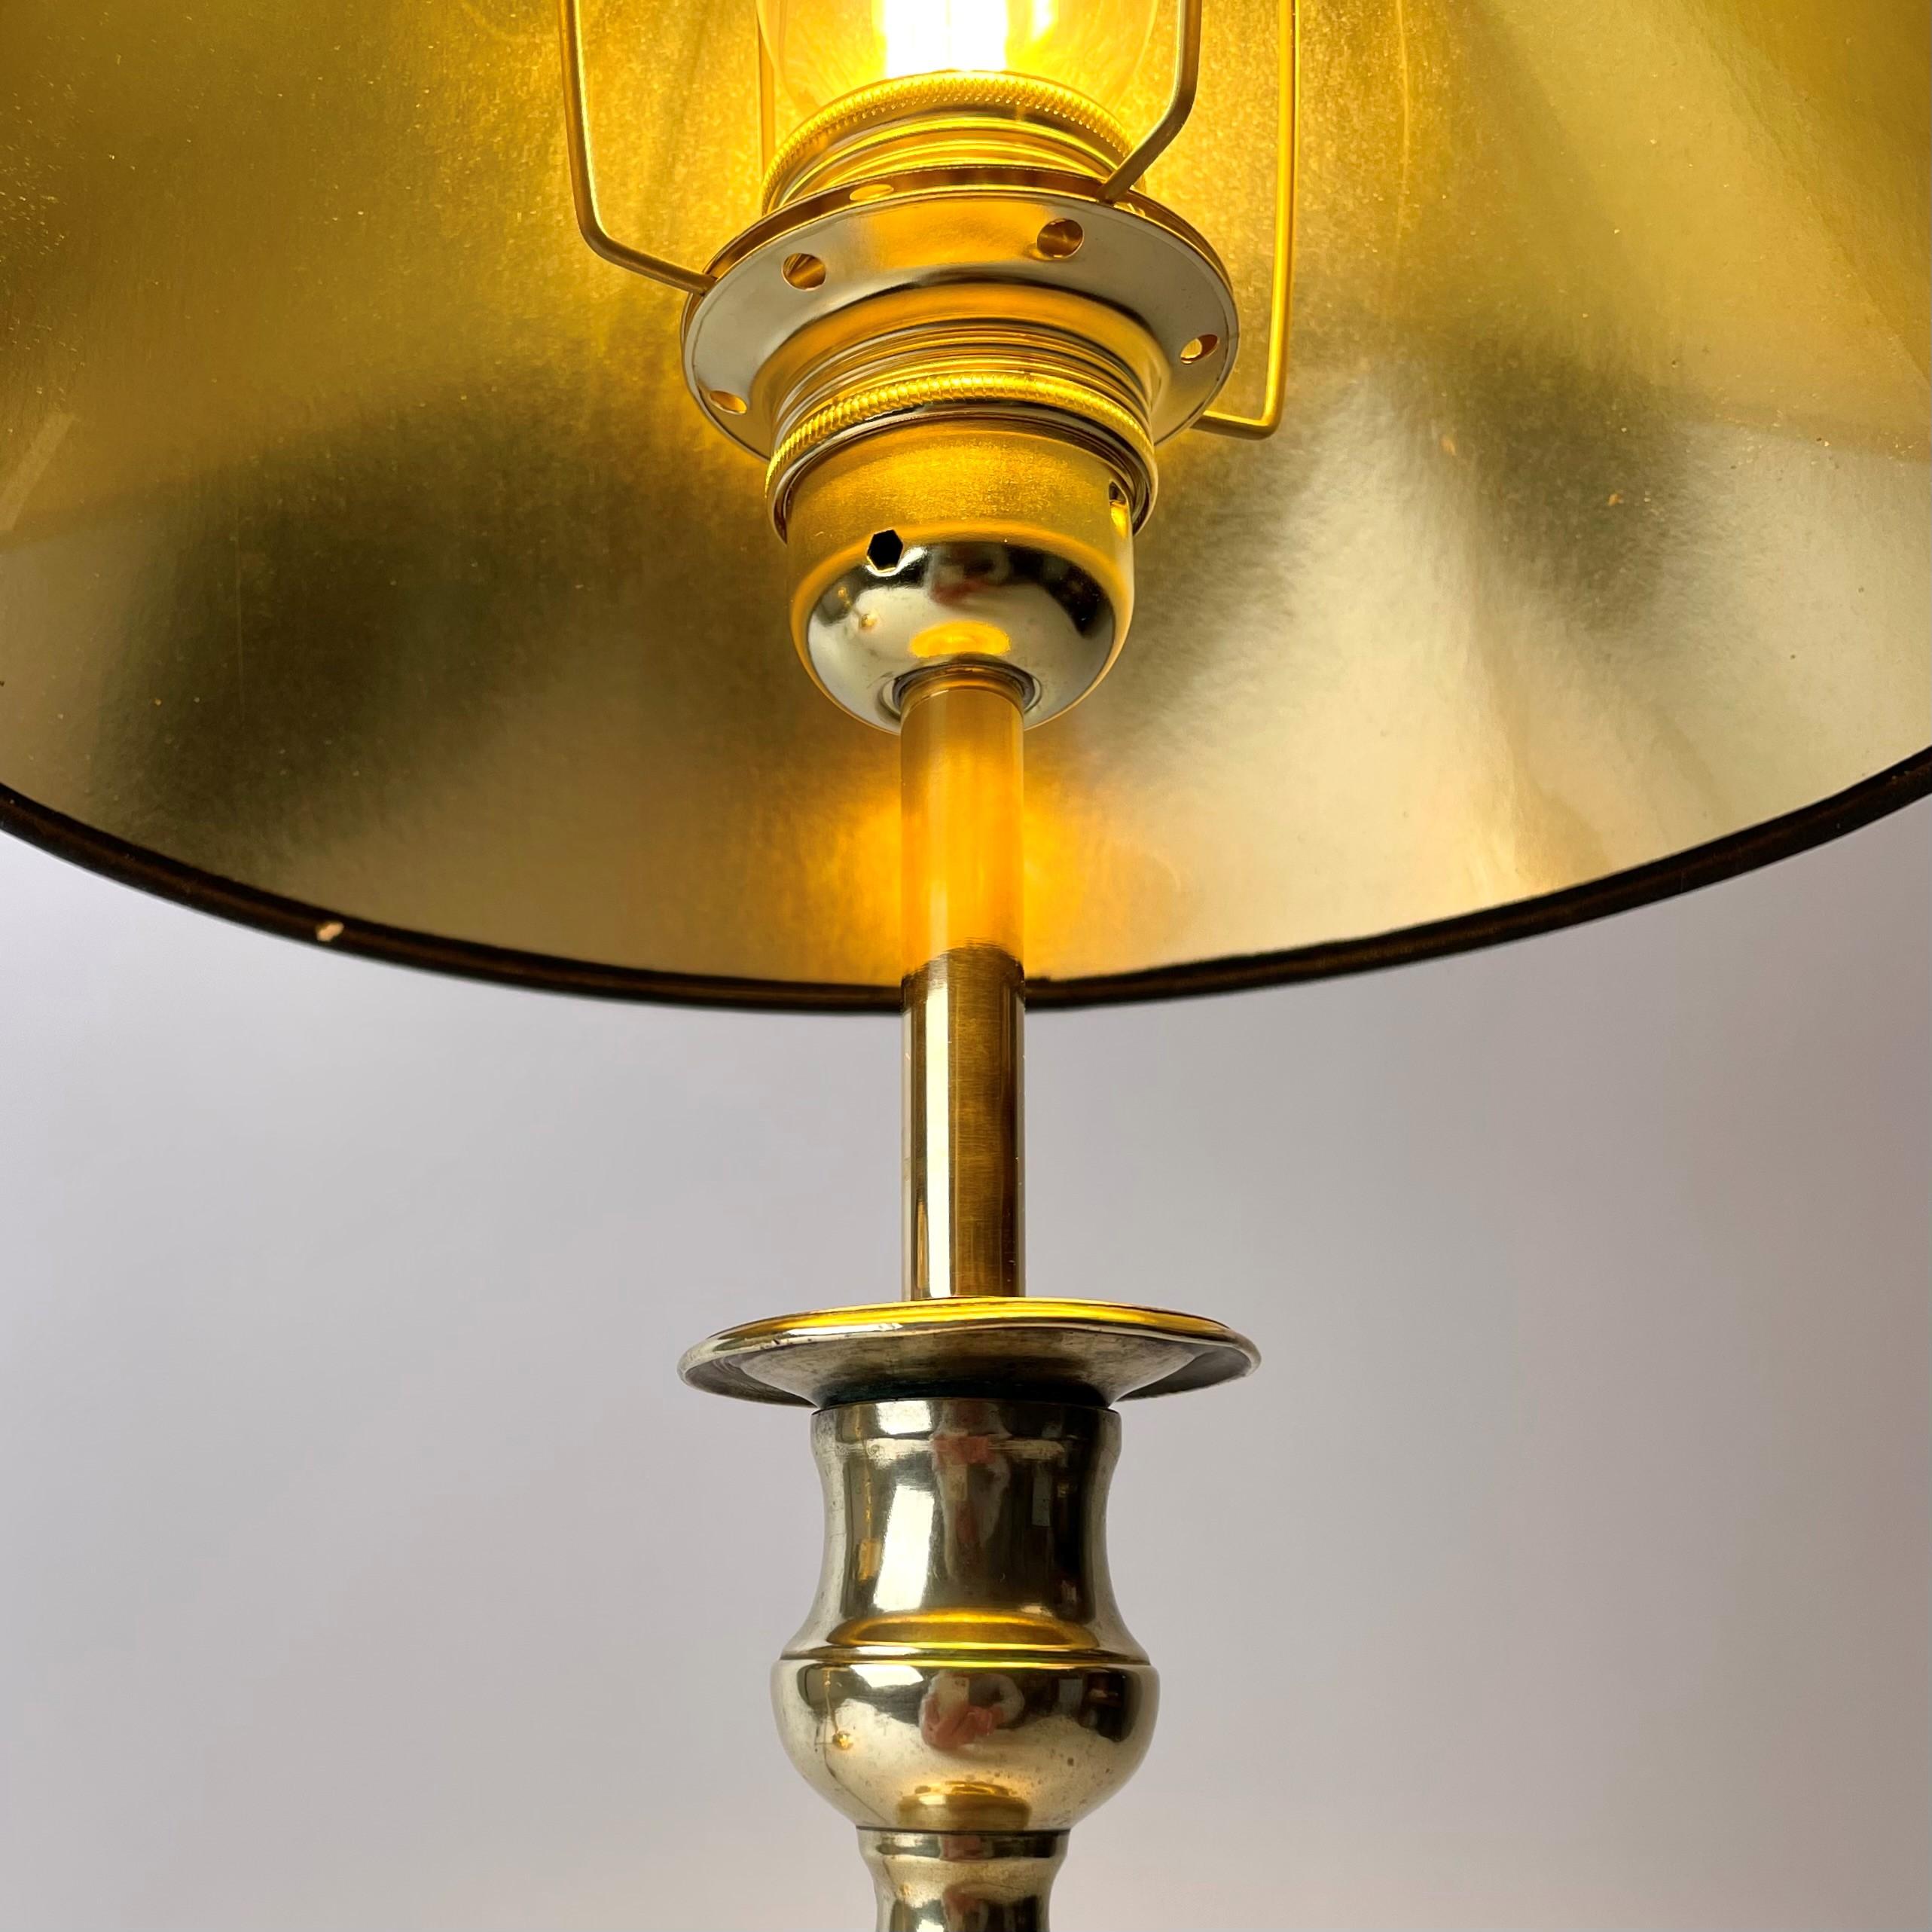 Brass Pair of Table Lamps, Originally Empire Candlesticks